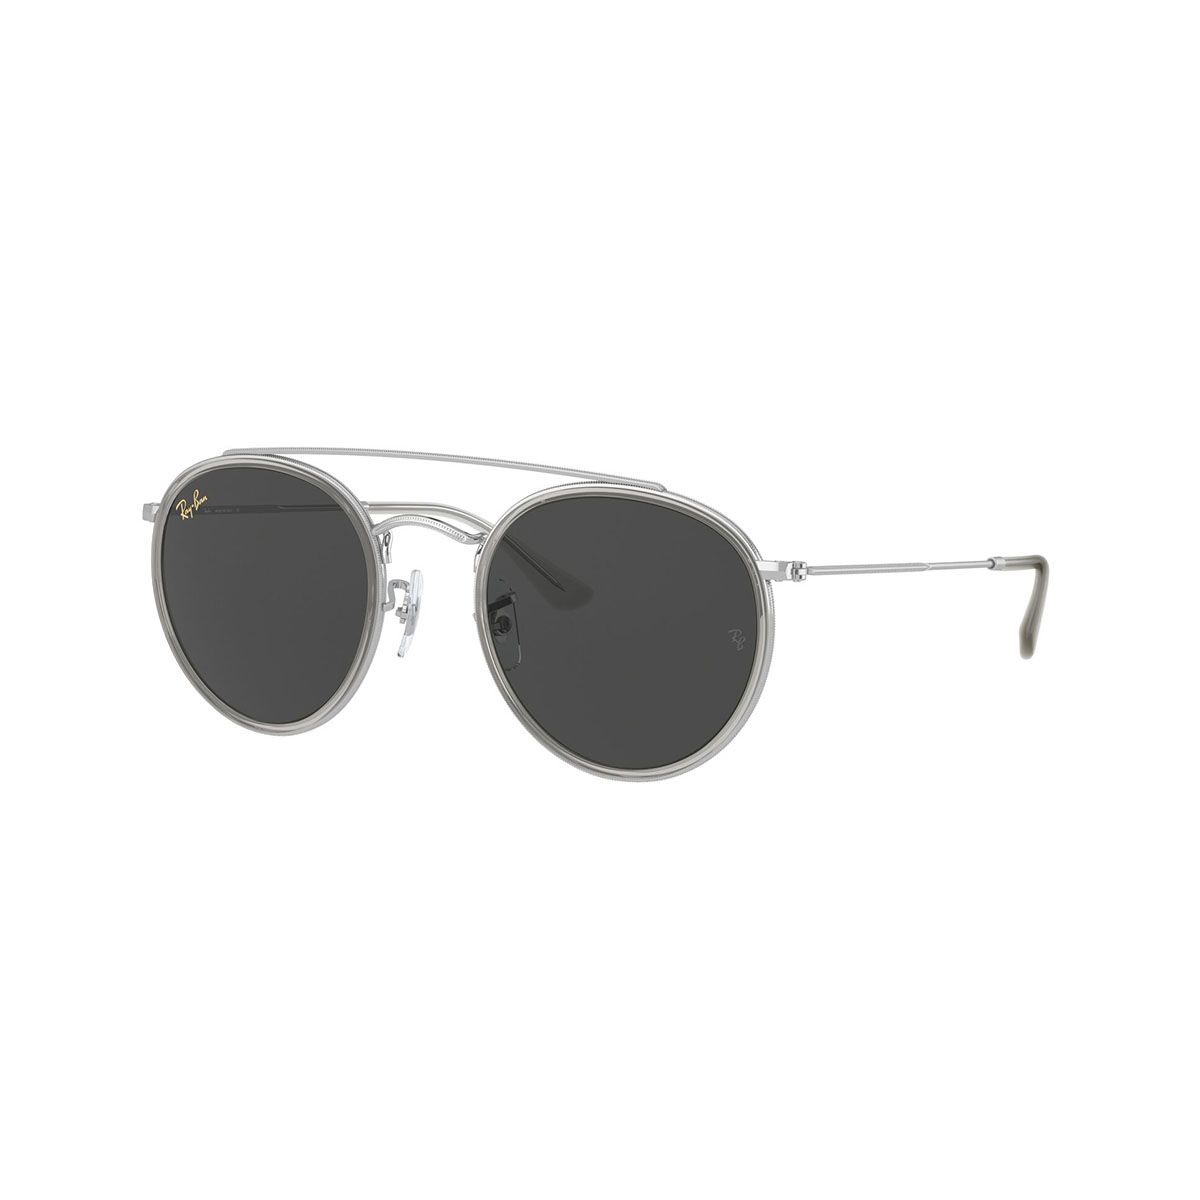 RB3647N Round Sunglasses 9211B1 - size 51